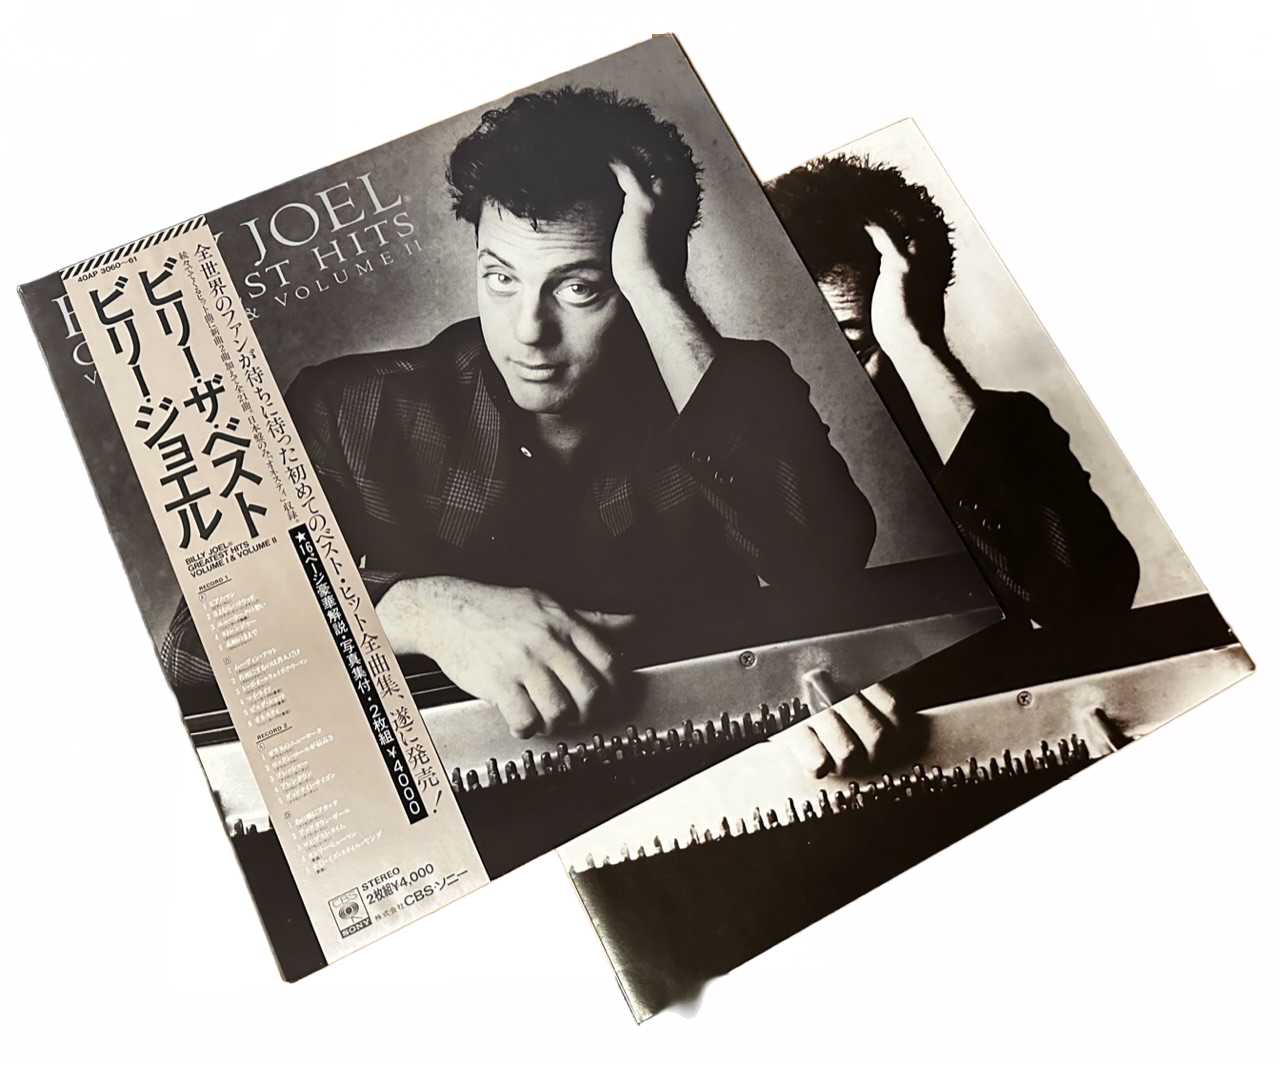 Billy Joel - Greatest Hits Volume I & Volume II [Japanese Vinyl